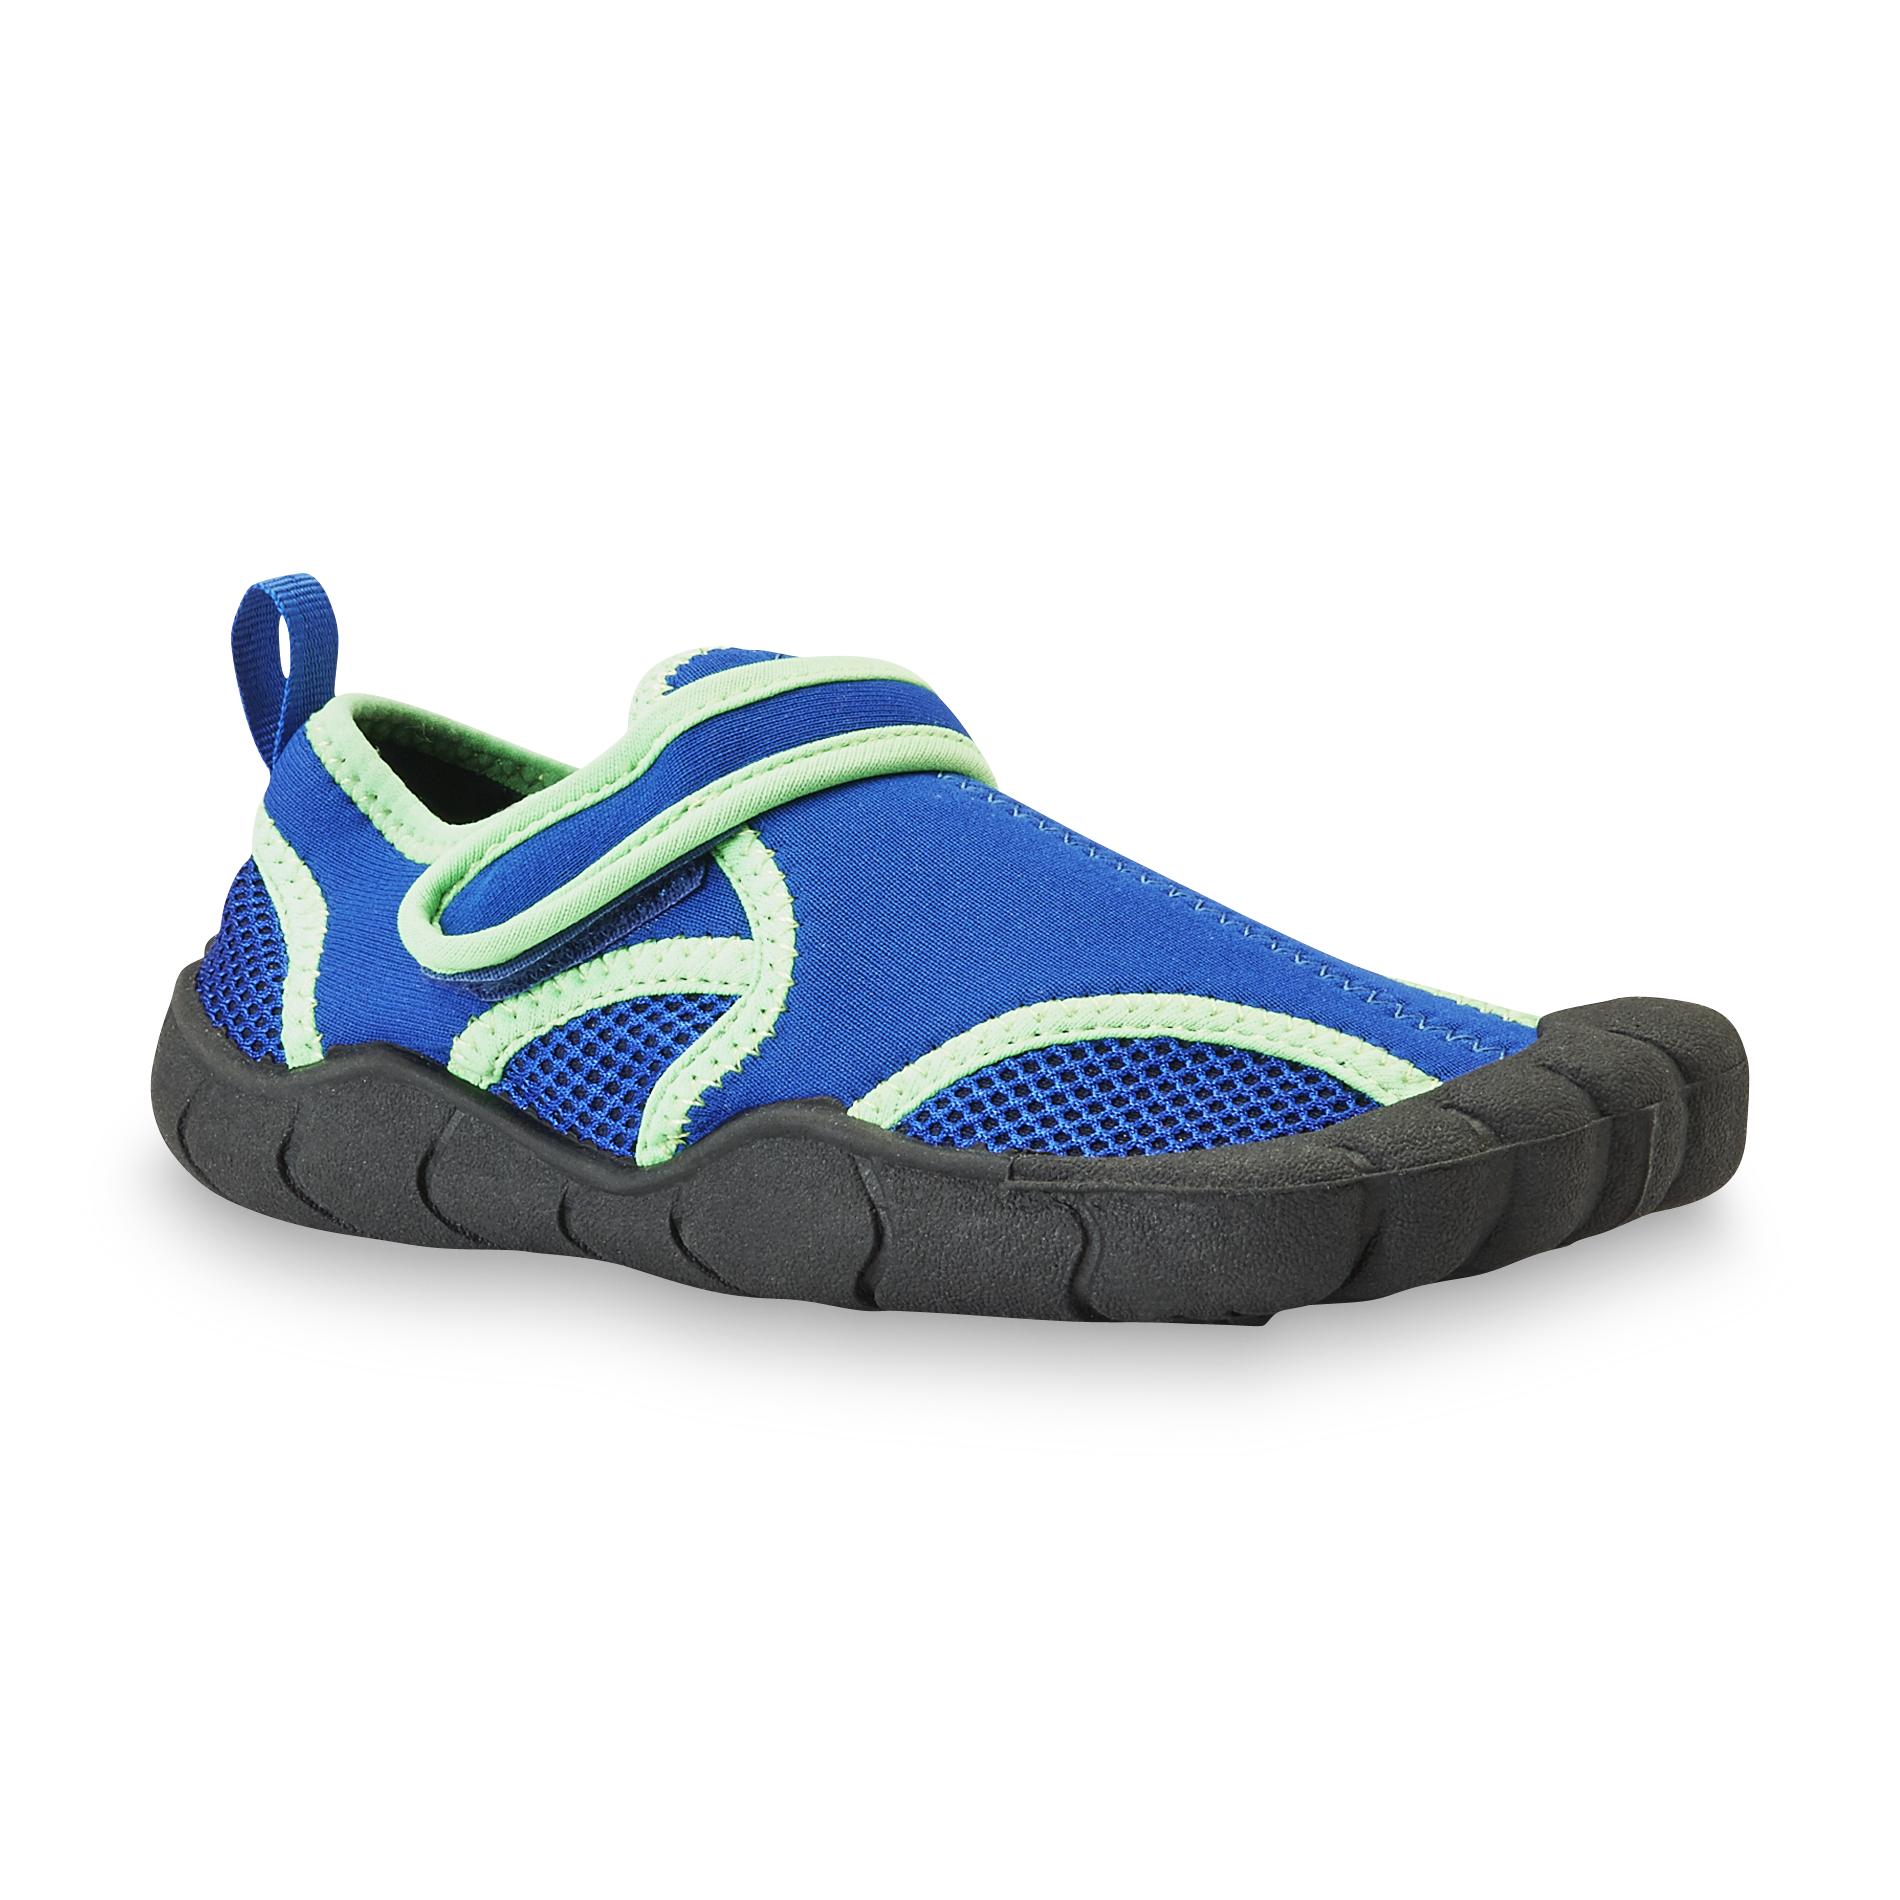 Personal Identity Toddler Boy's Zane Blue/Green Velcro Water Shoe